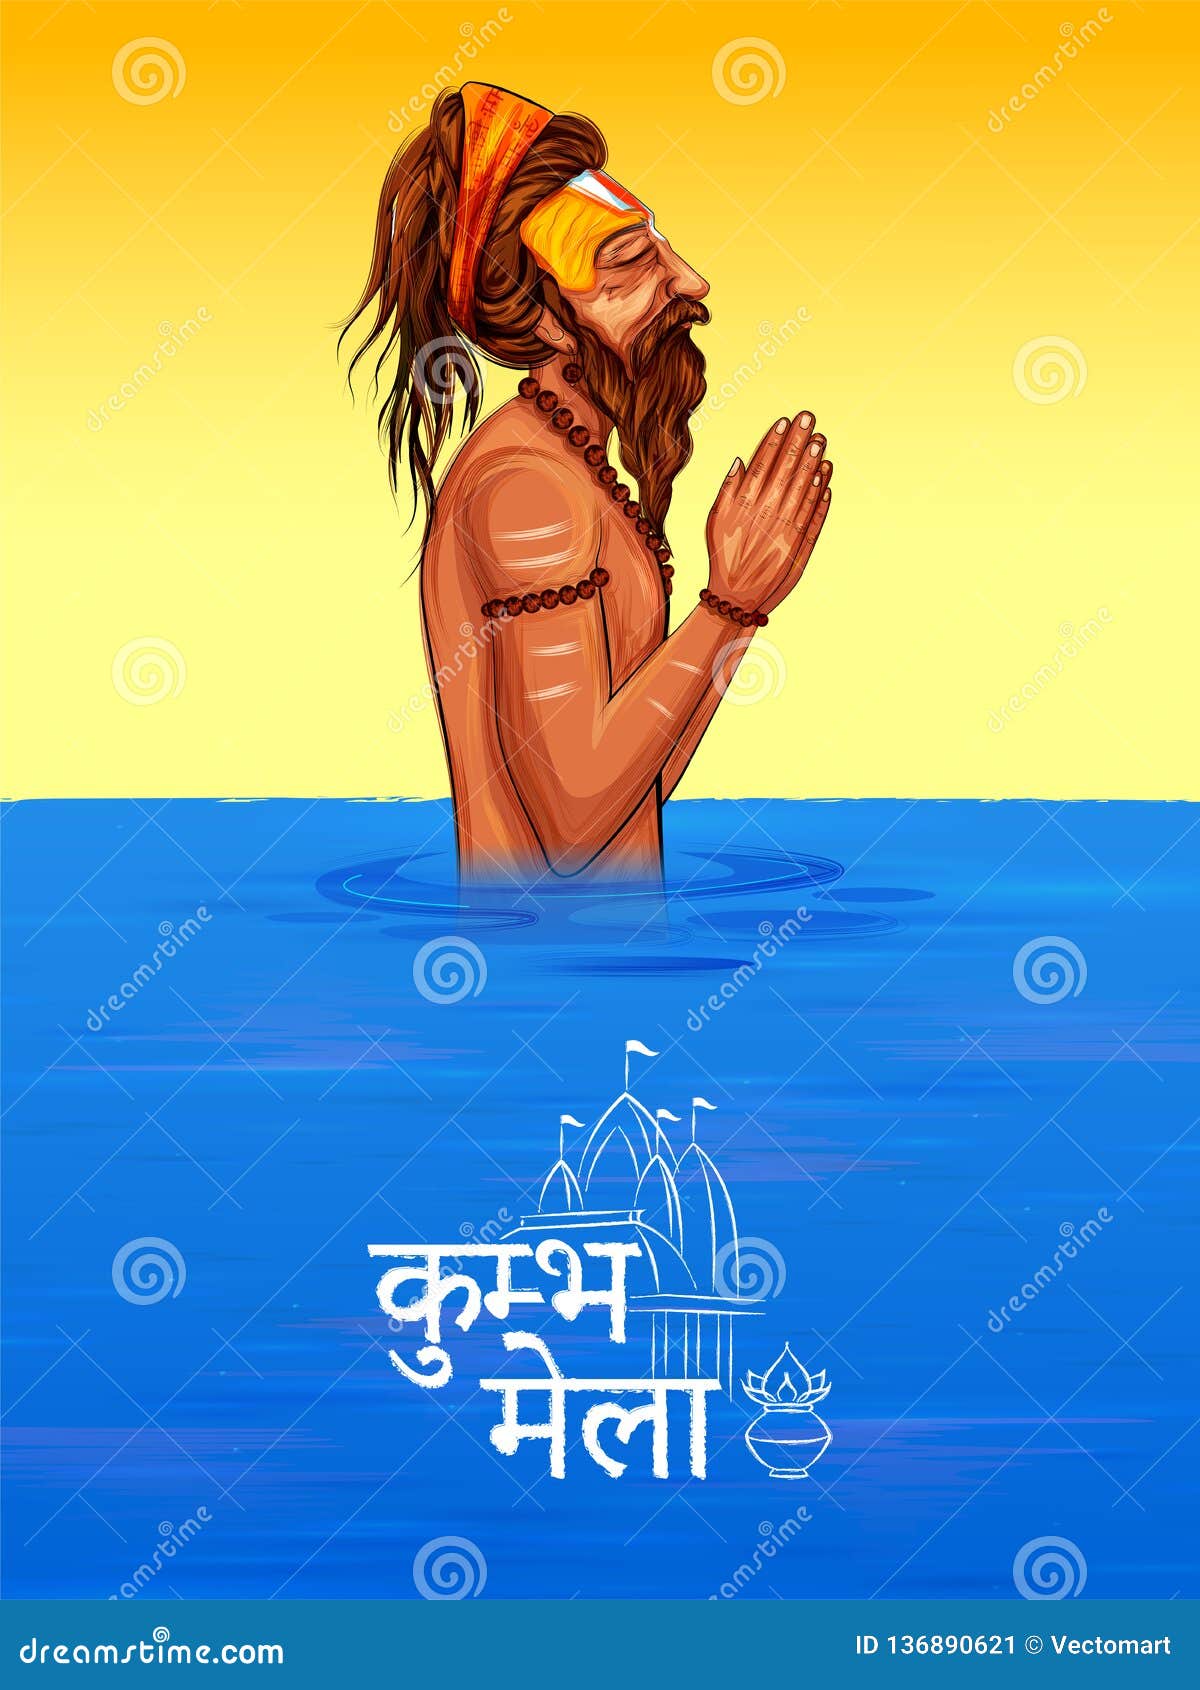 sadhu saint of india for grand festival and hindi text kumbh mela